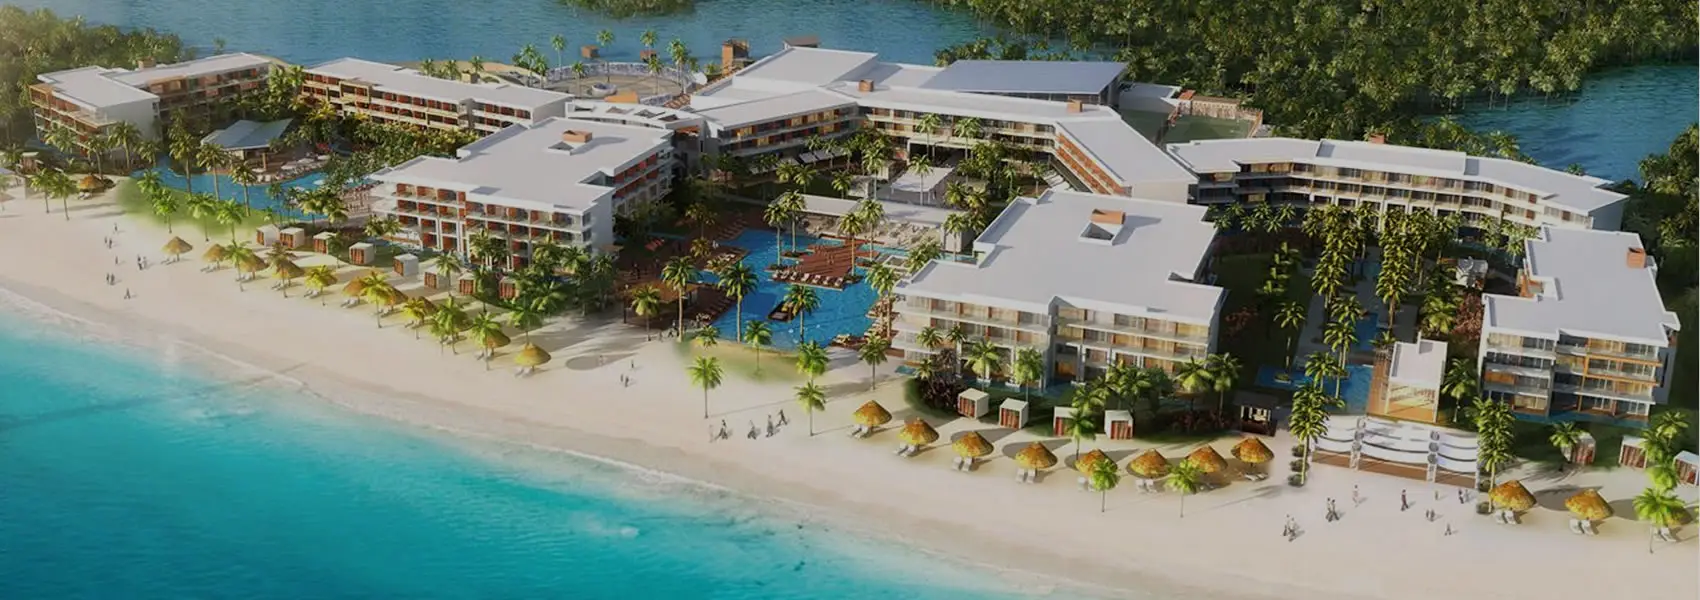 Luxury Holidays Dominican Republic Breathless Punta Cana Header Pure Destination 